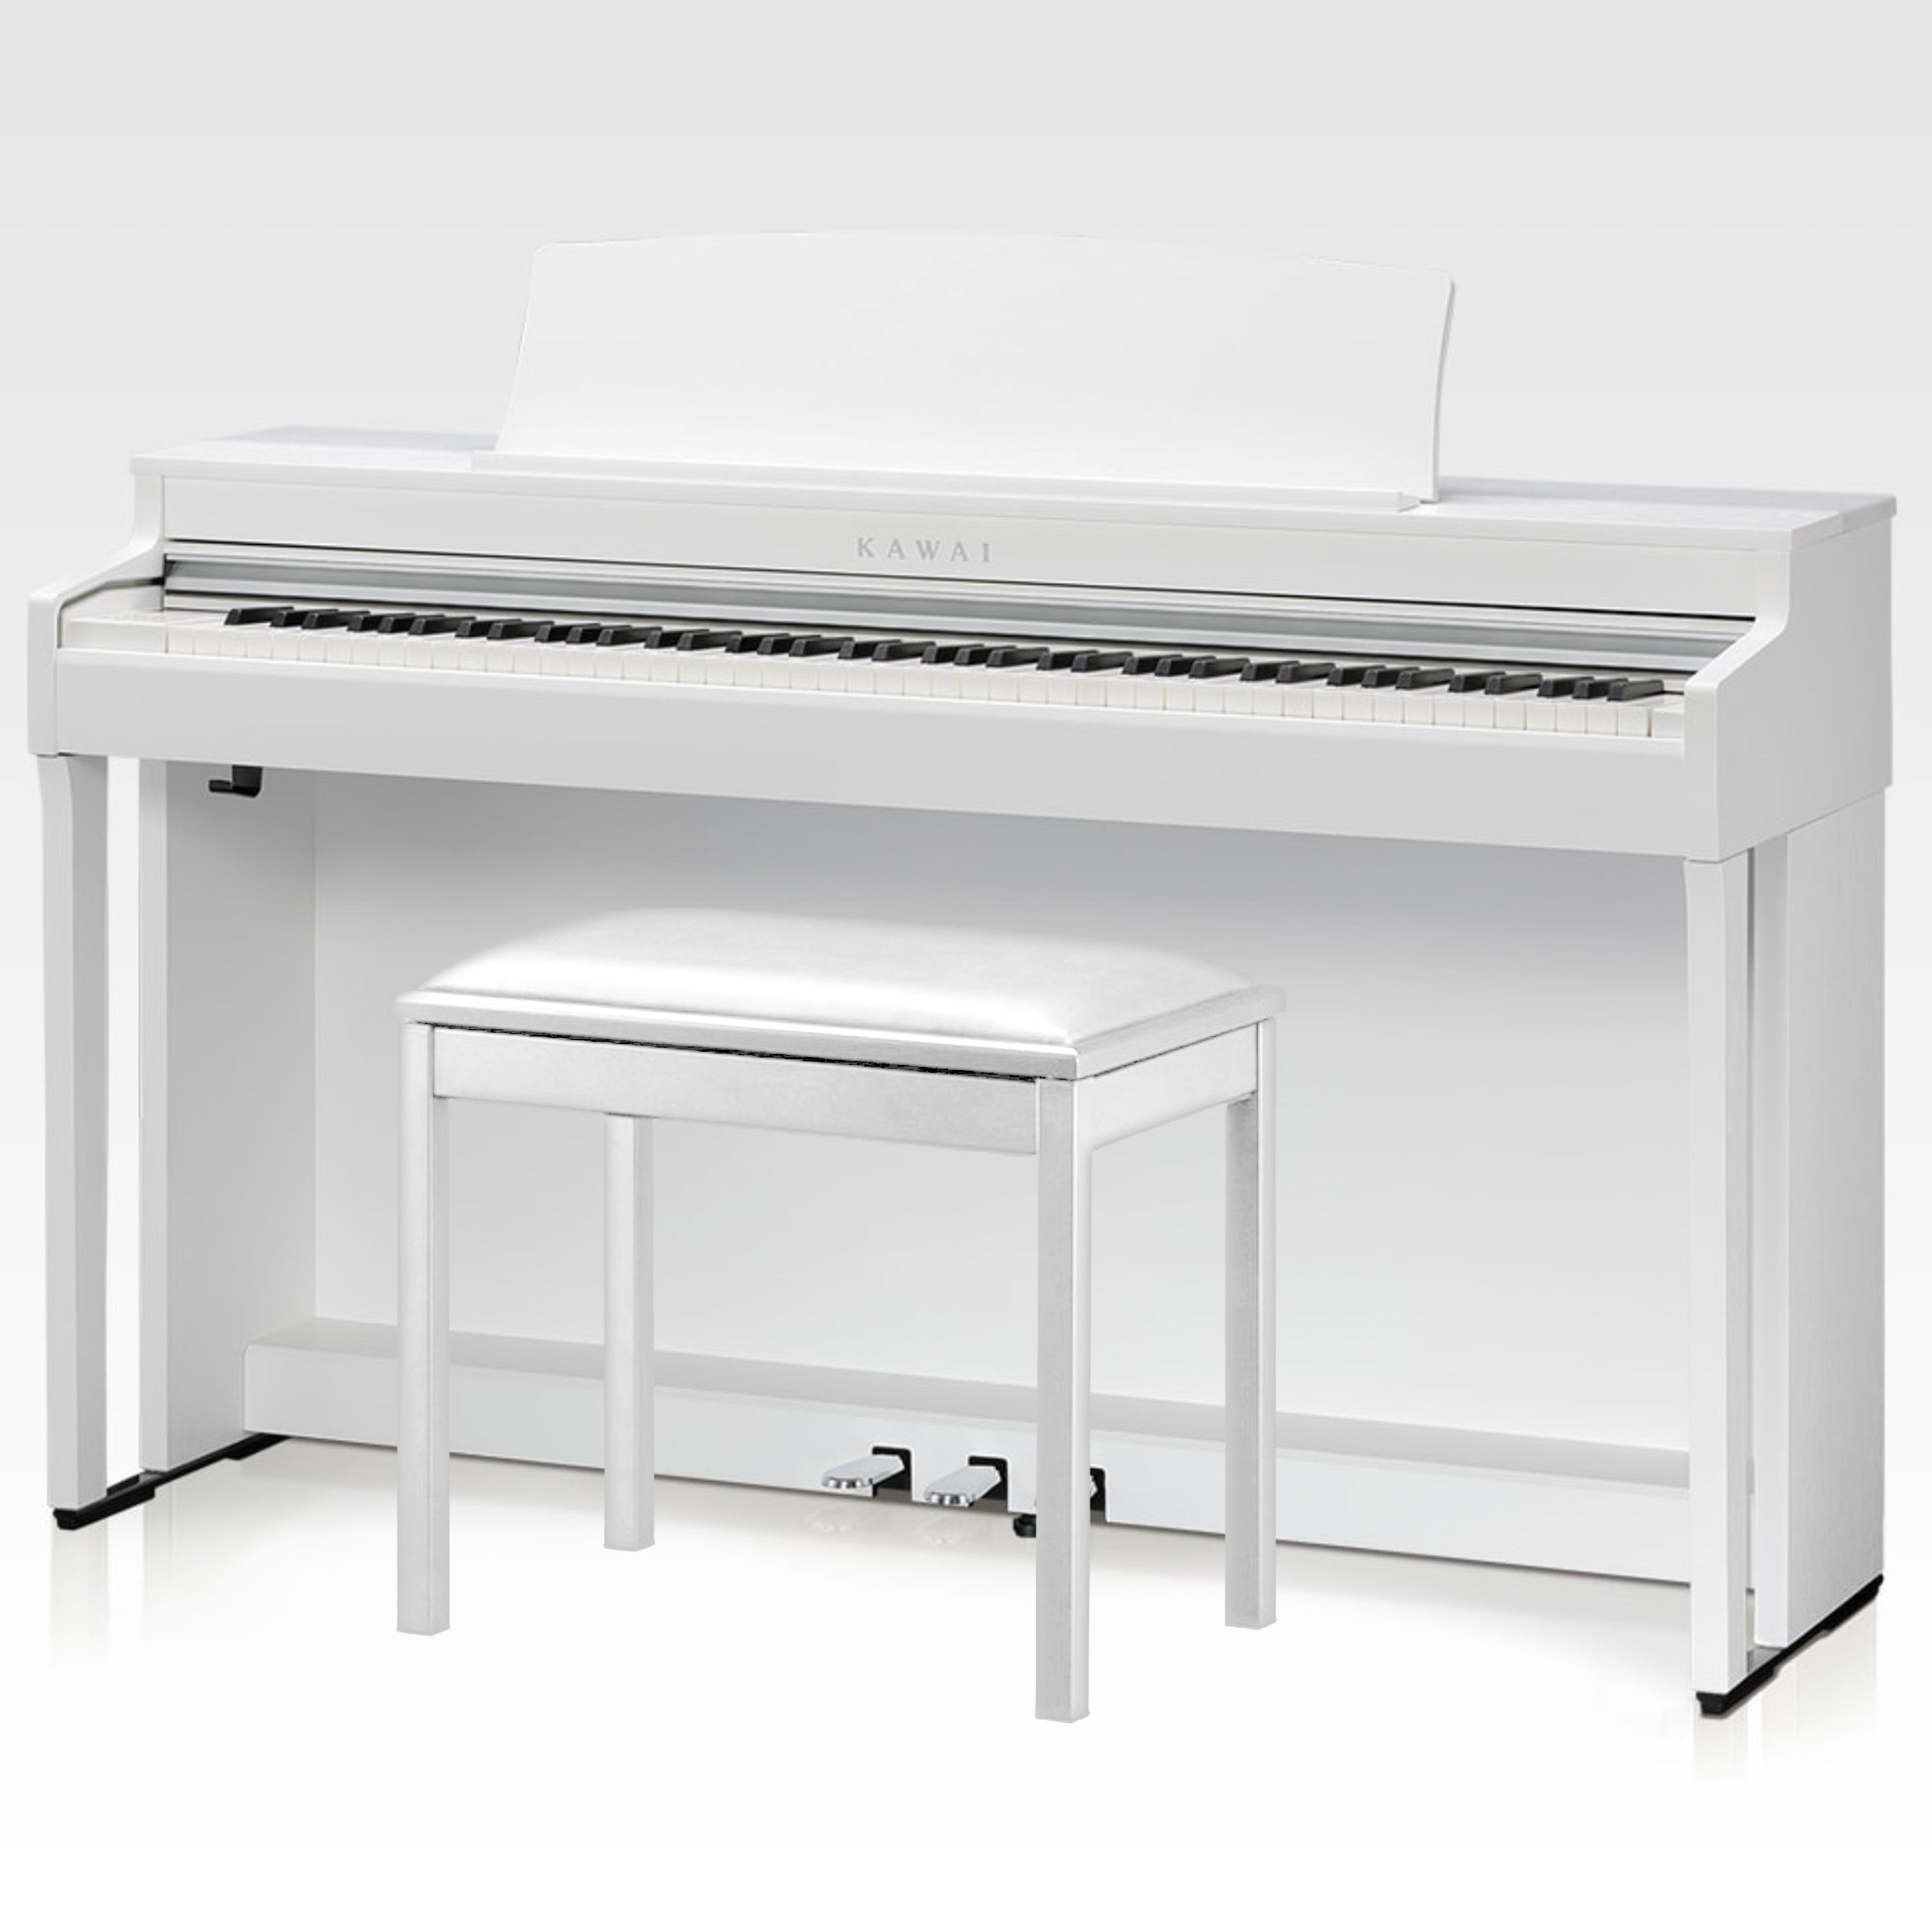 Kawai CN301 Digital Piano - Satin White – Kraft Music